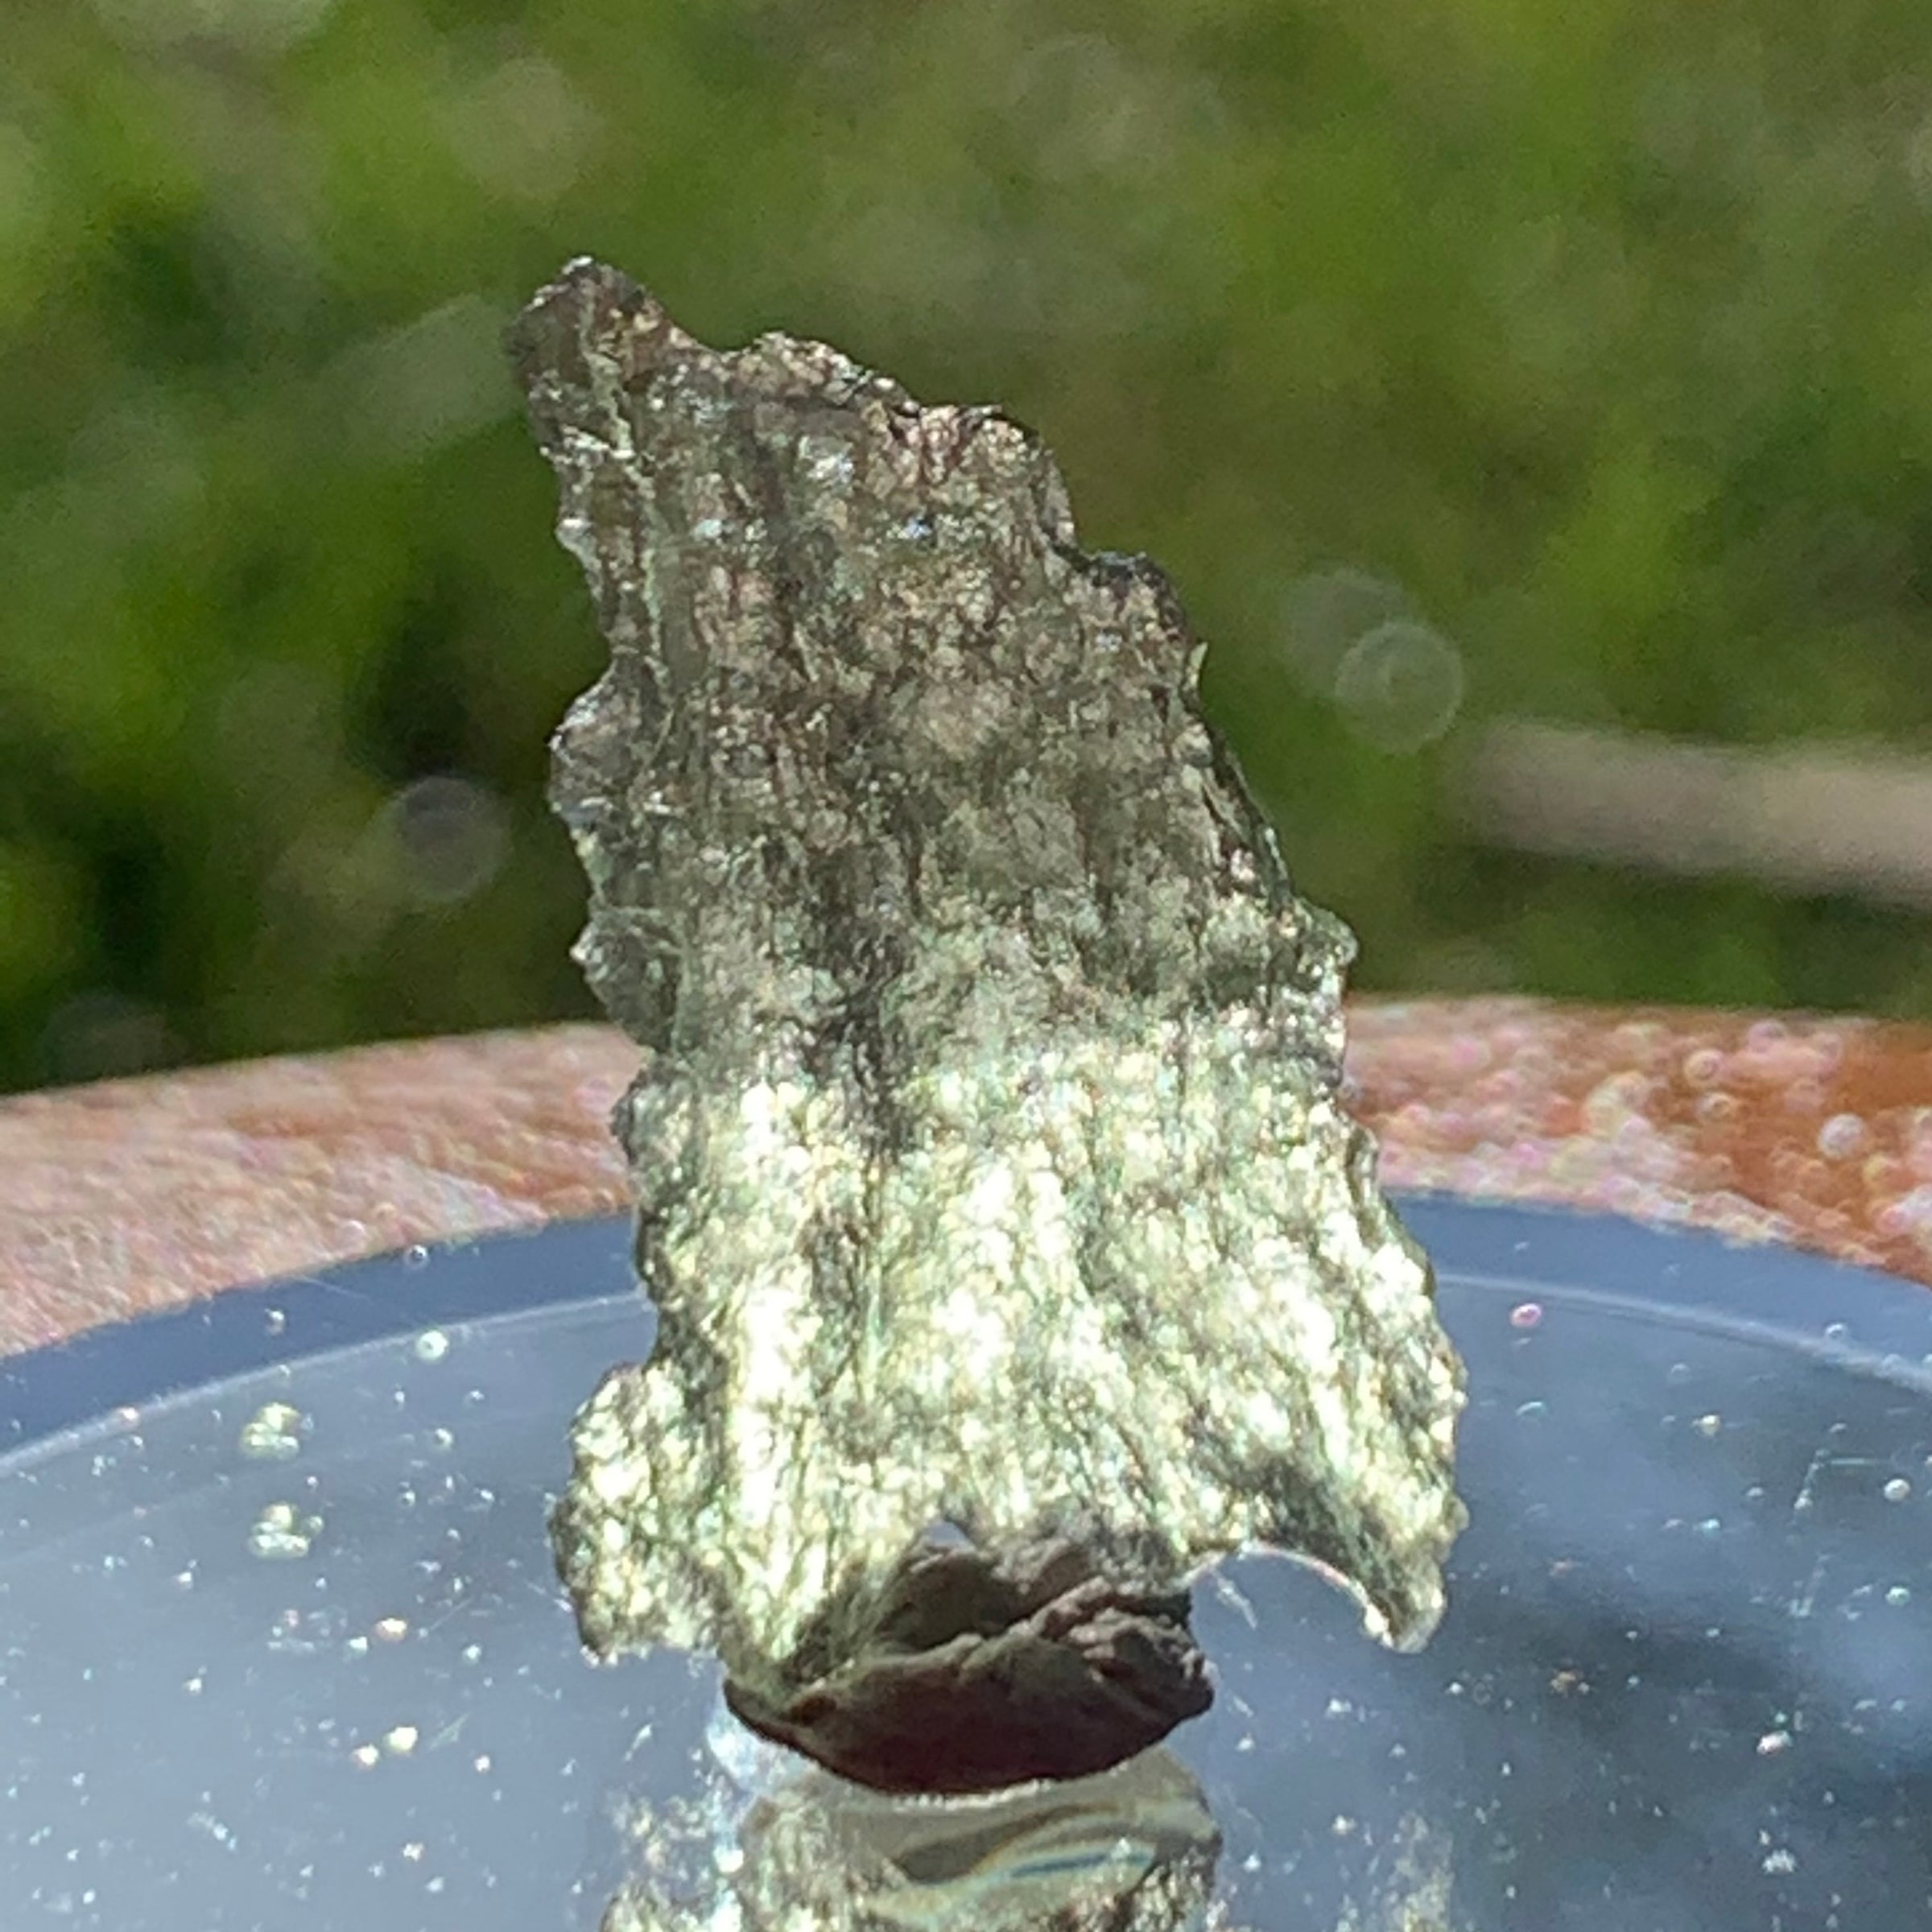 Besednice Moldavite Genuine Certified 0.8 grams Small